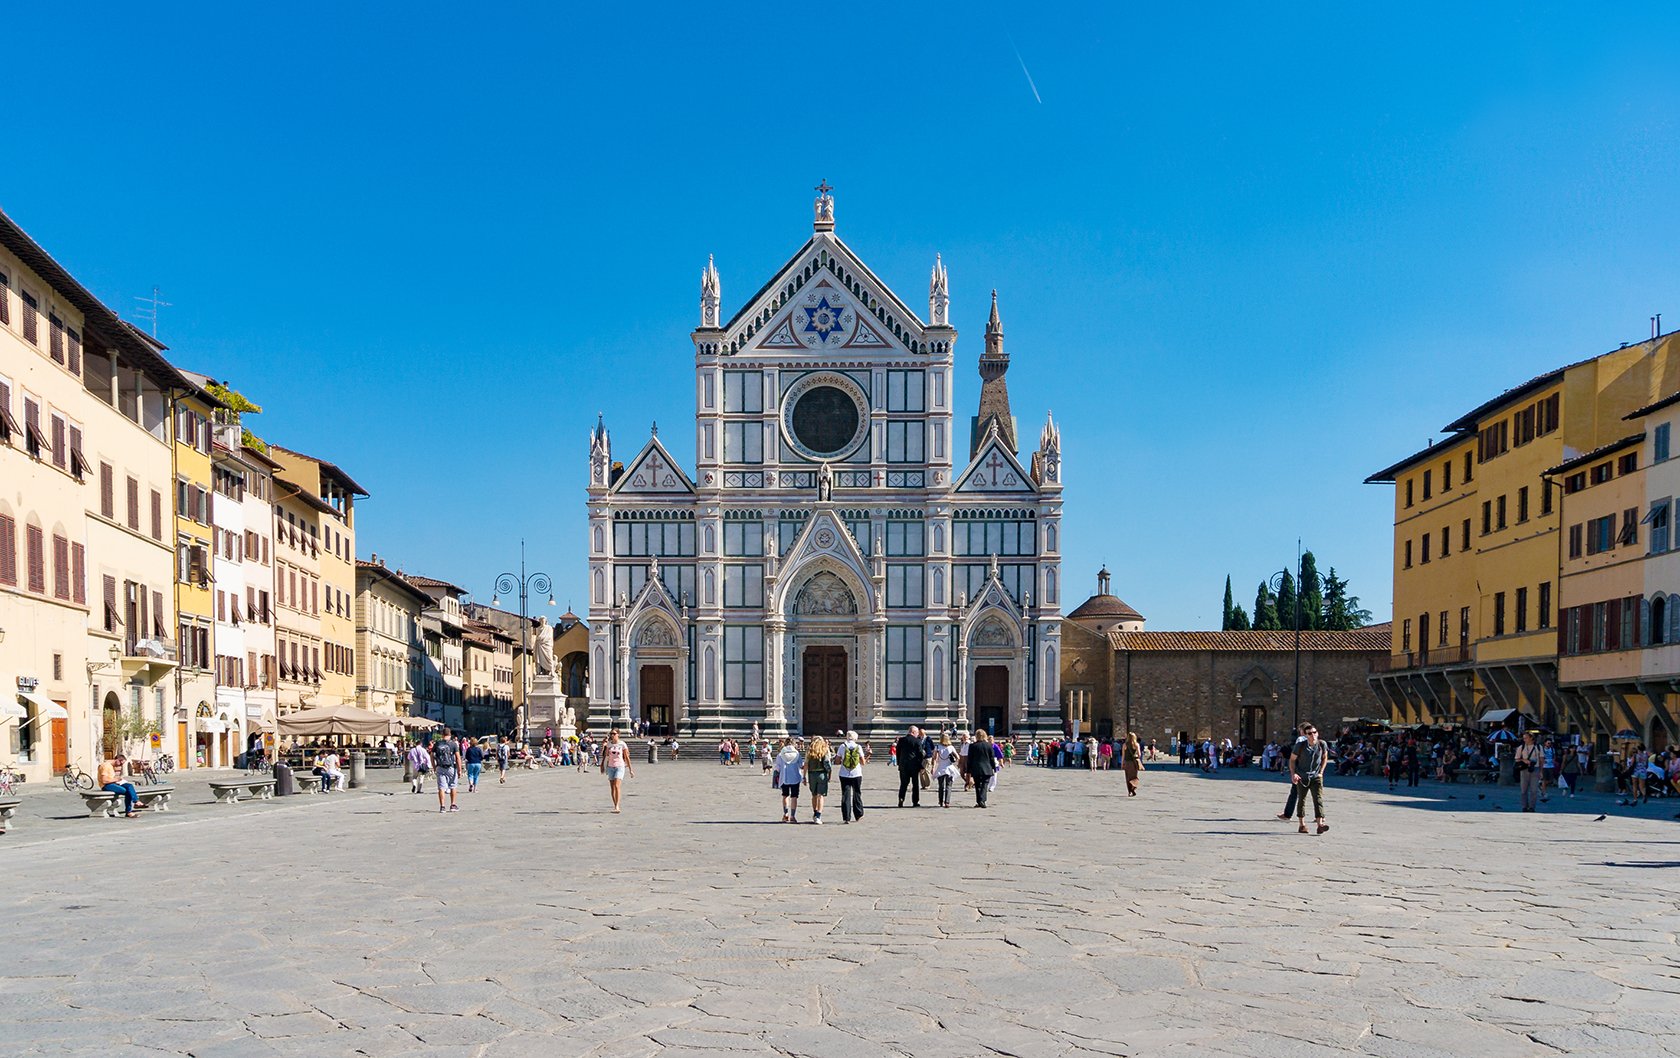 Piazza Santa Croce with the Basilica of Santa Croce